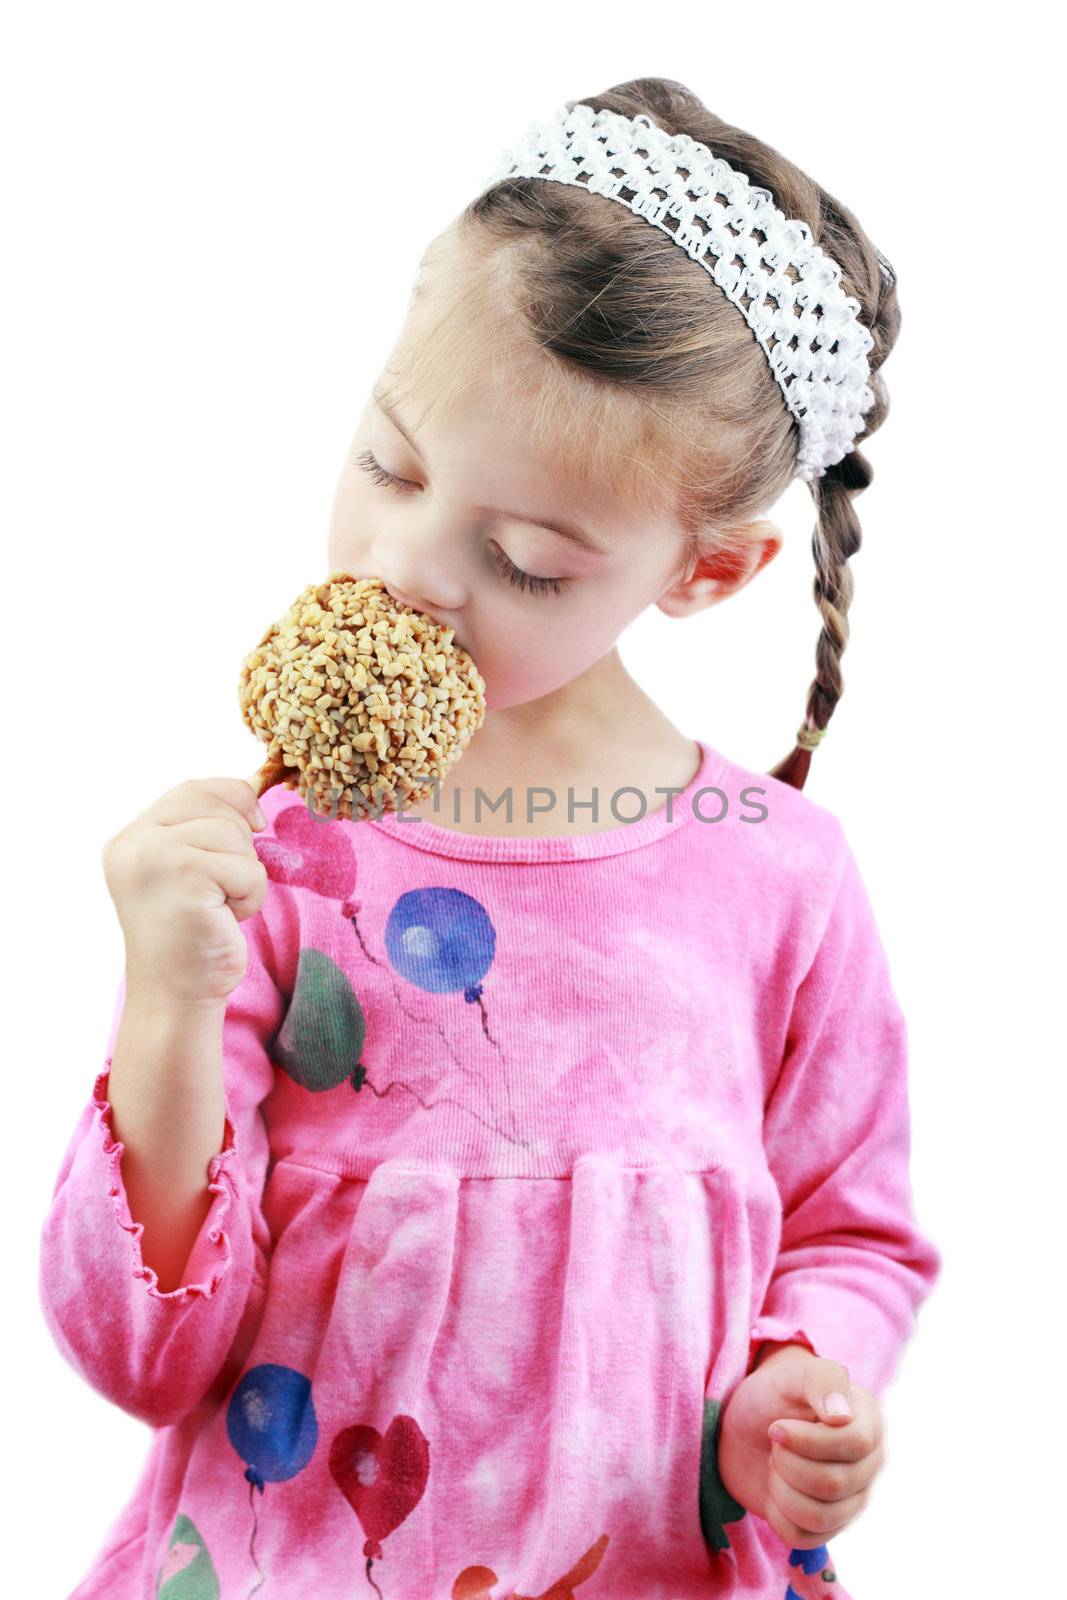 Child Eating a Caramel Apple by StephanieFrey